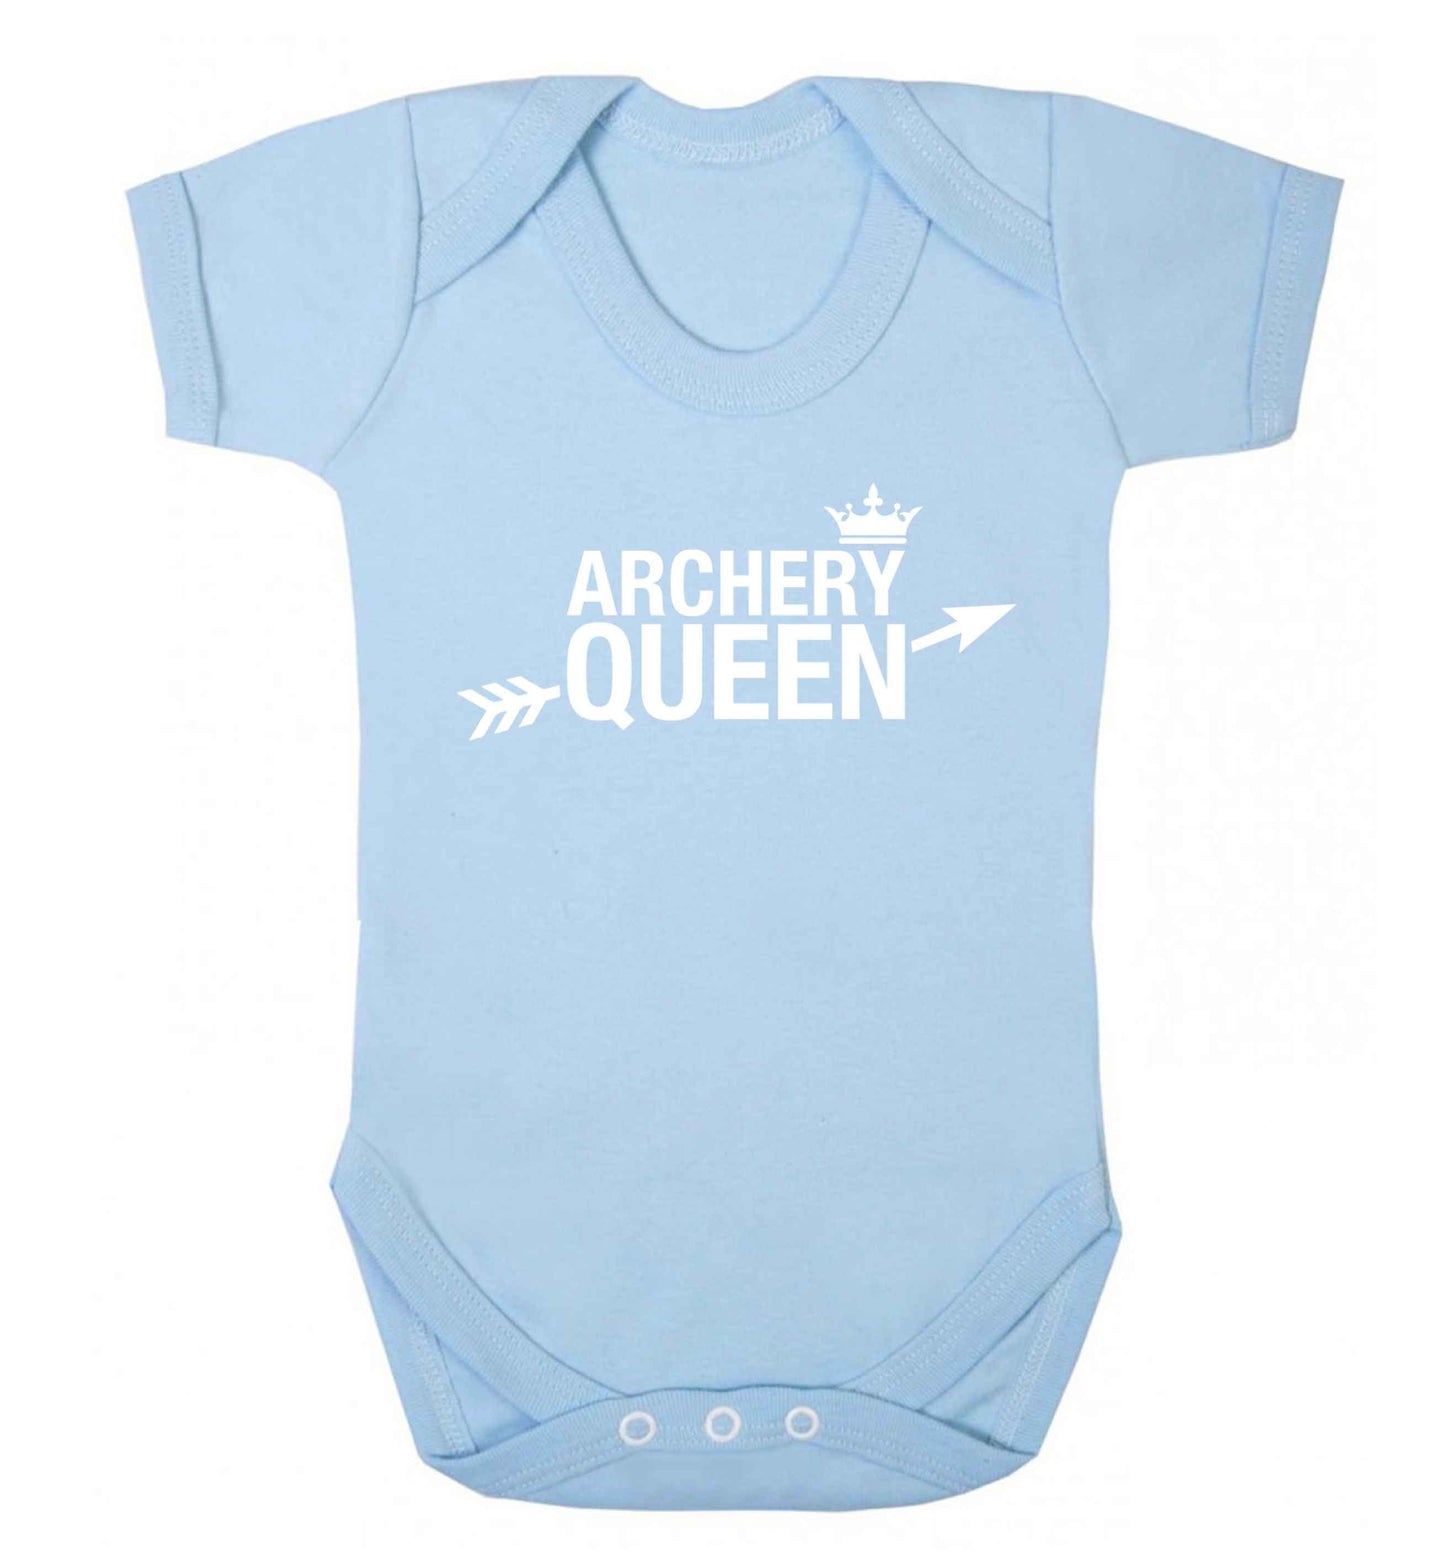 Archery queen Baby Vest pale blue 18-24 months